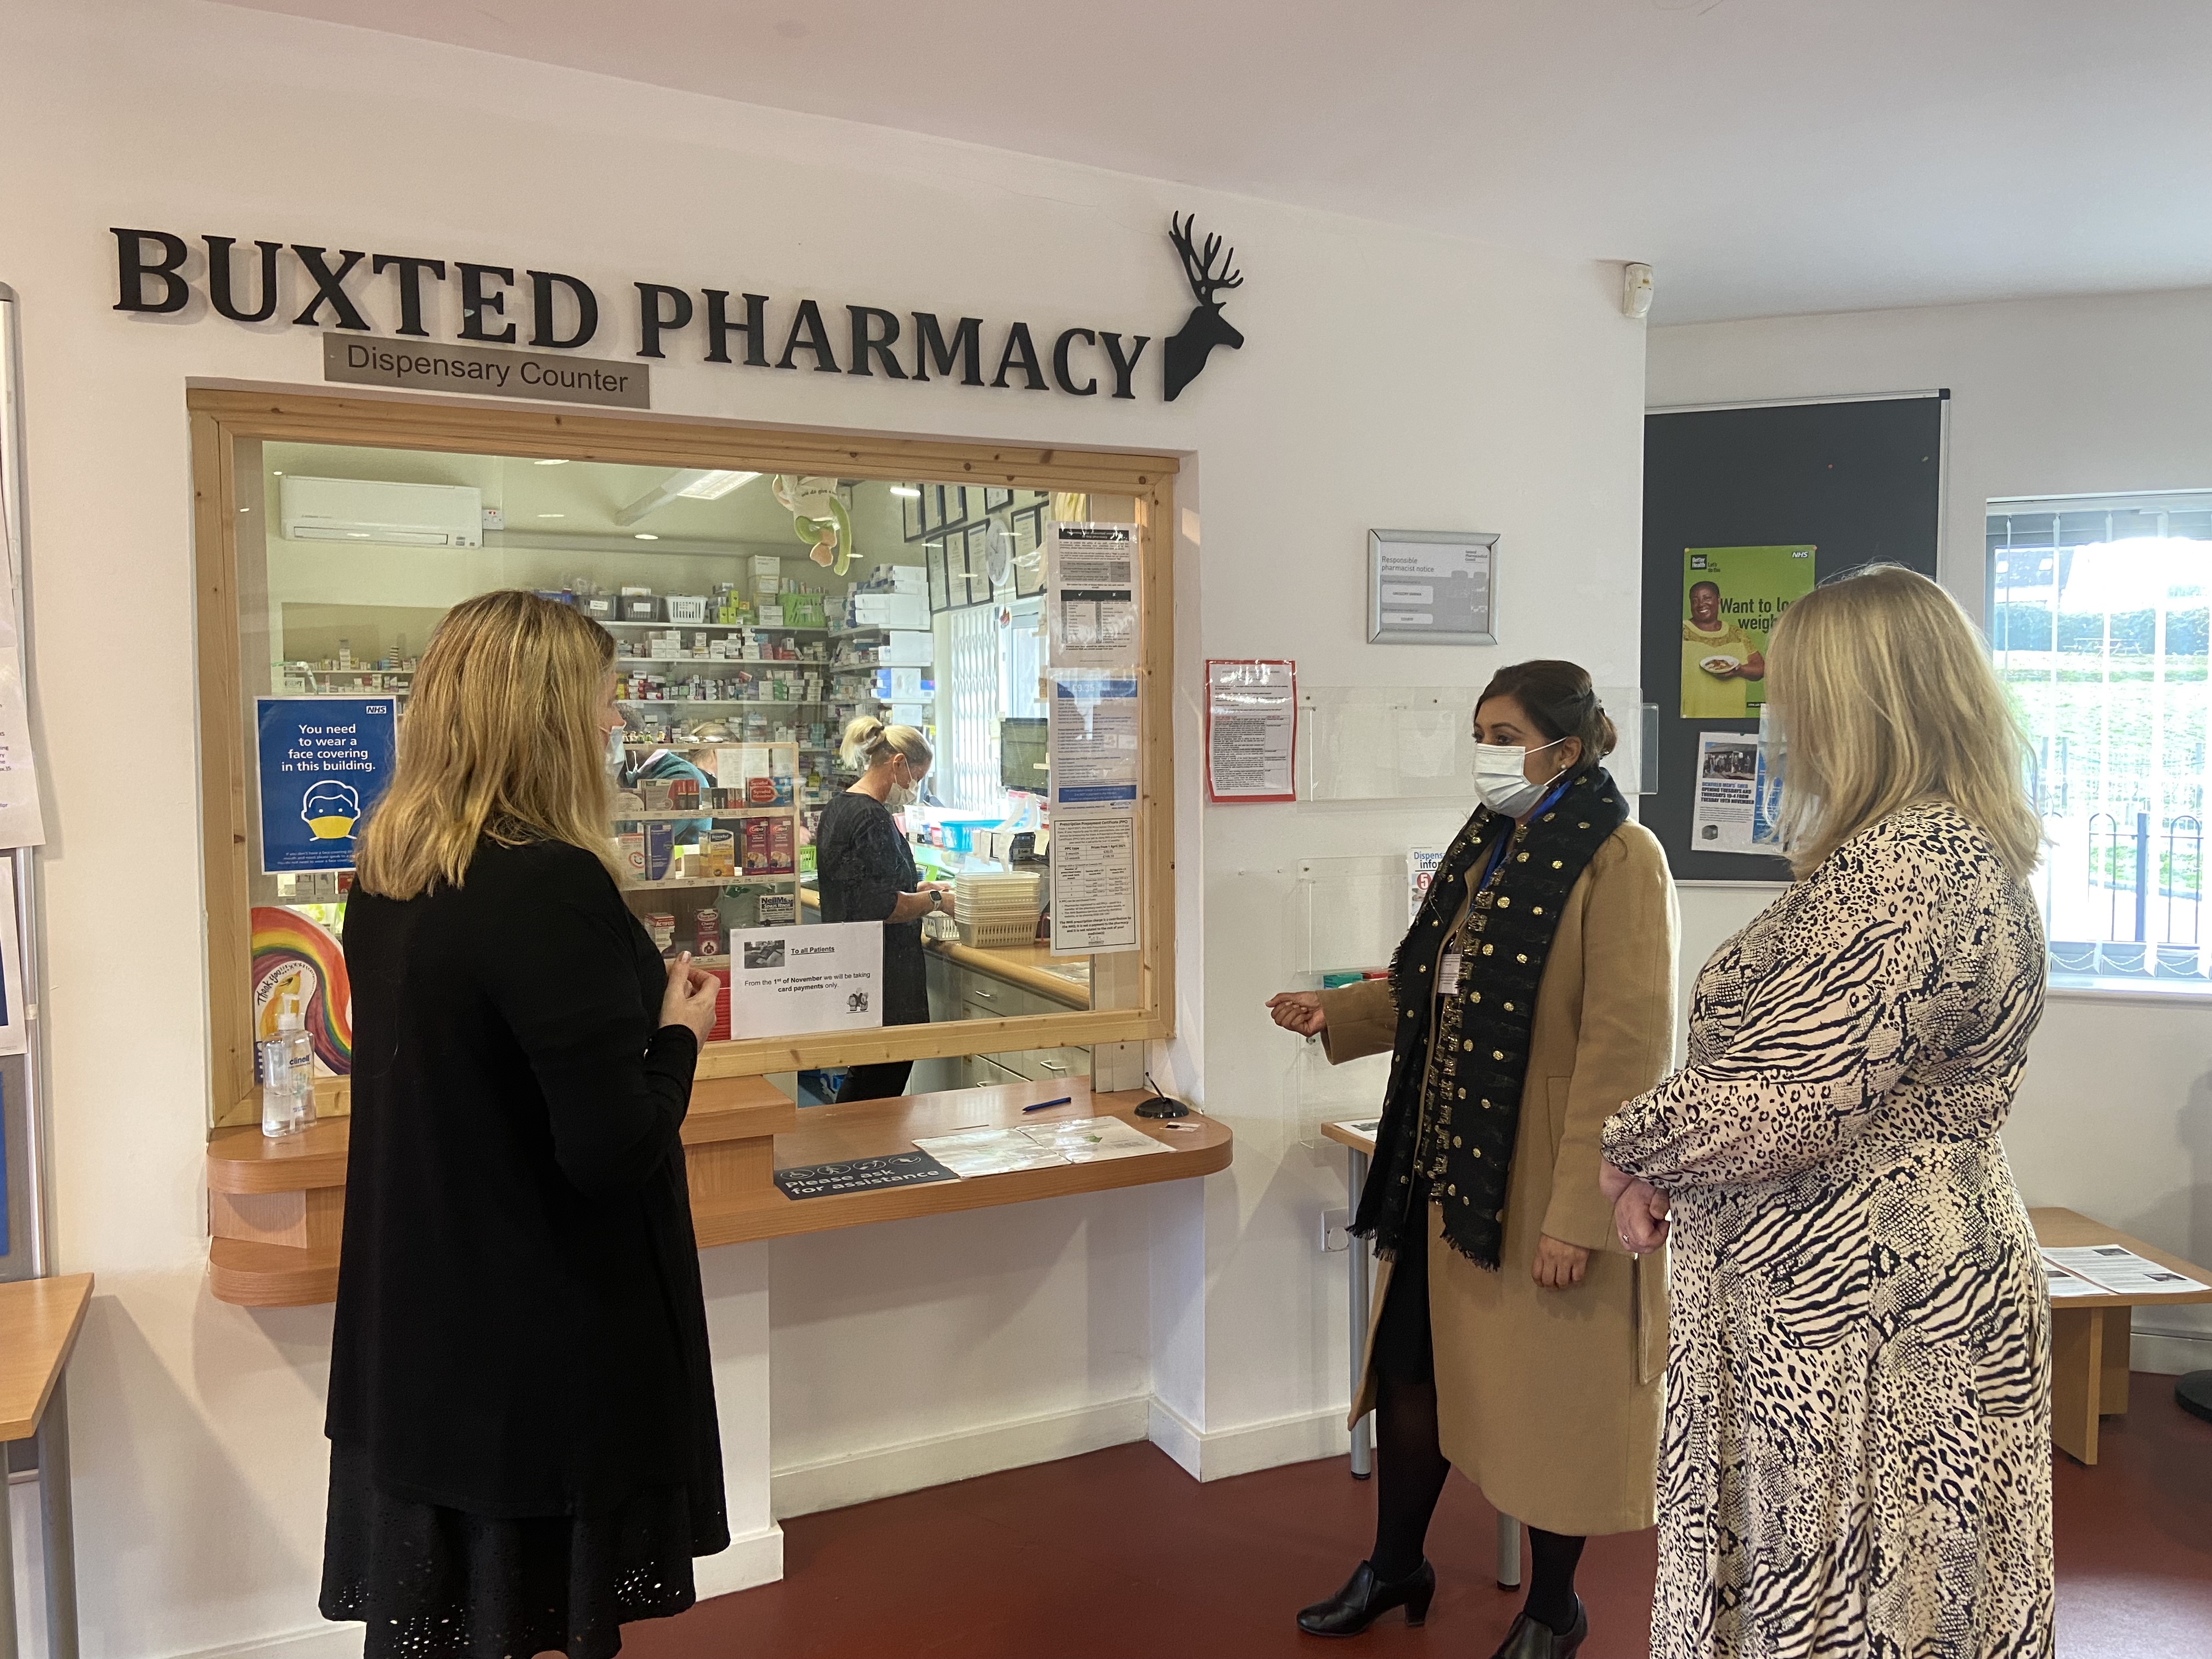 Buxted Pharmacy